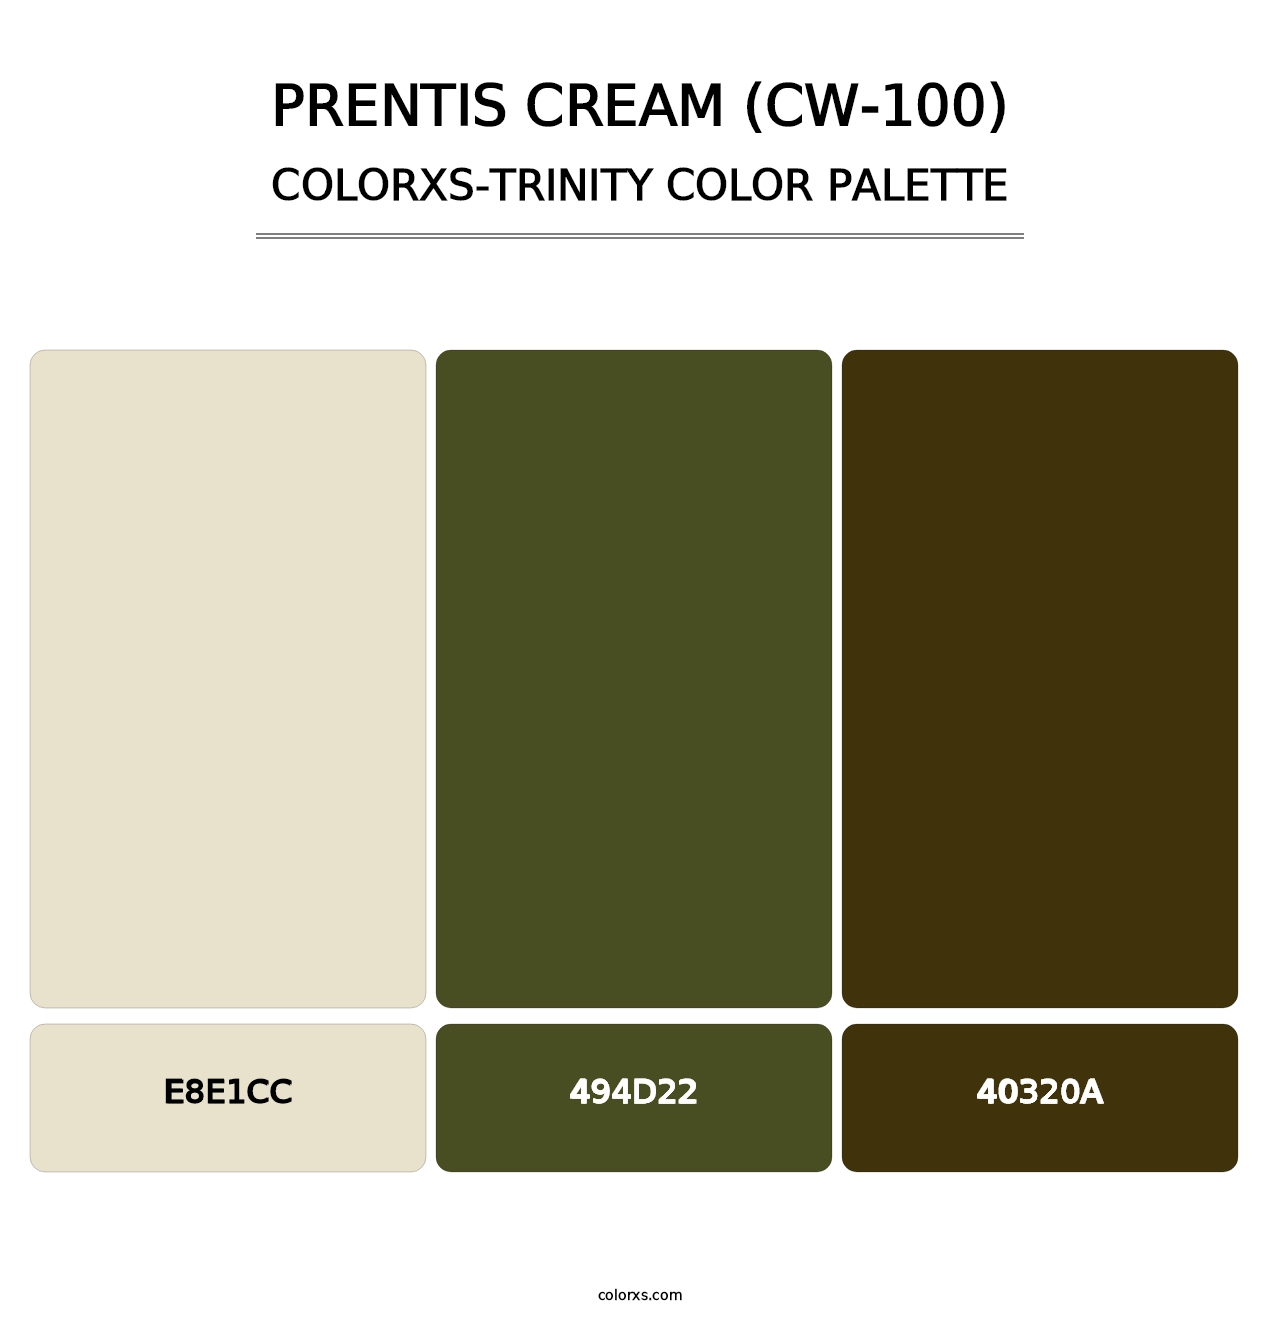 Prentis Cream (CW-100) - Colorxs Trinity Palette